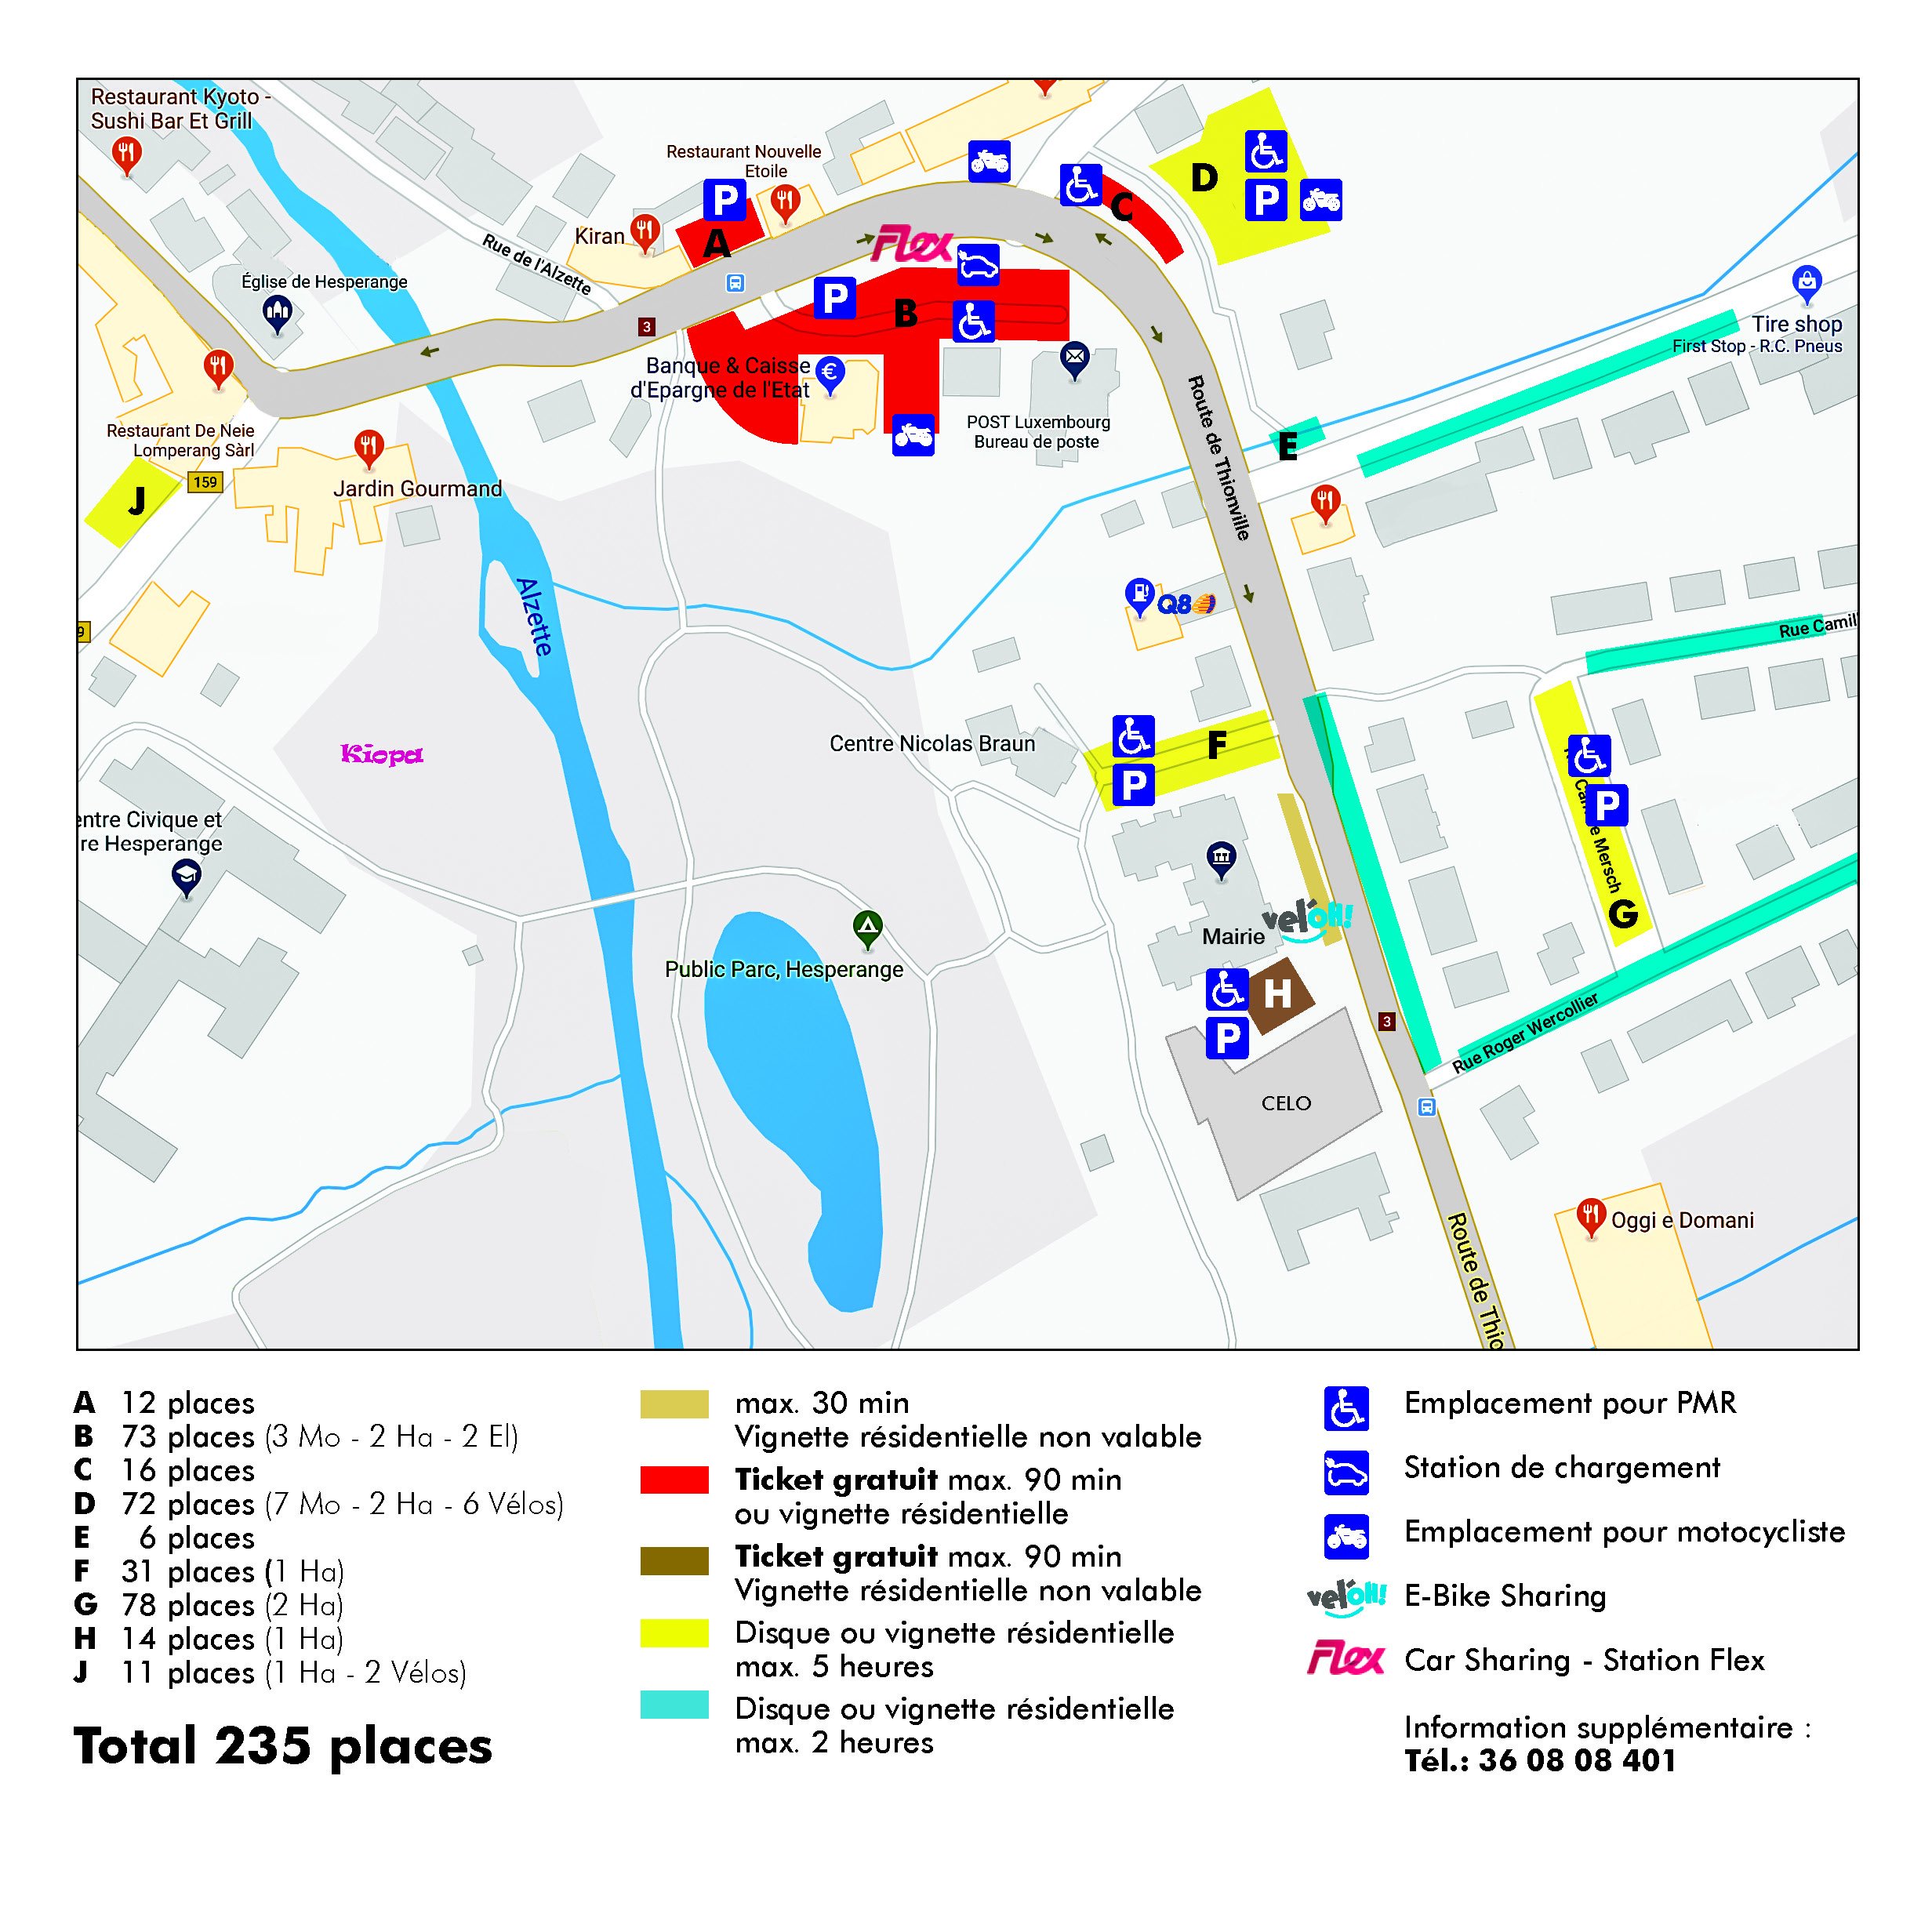 [Translate to Lëtzebuergesch:] map showing different parking zones in hesperange